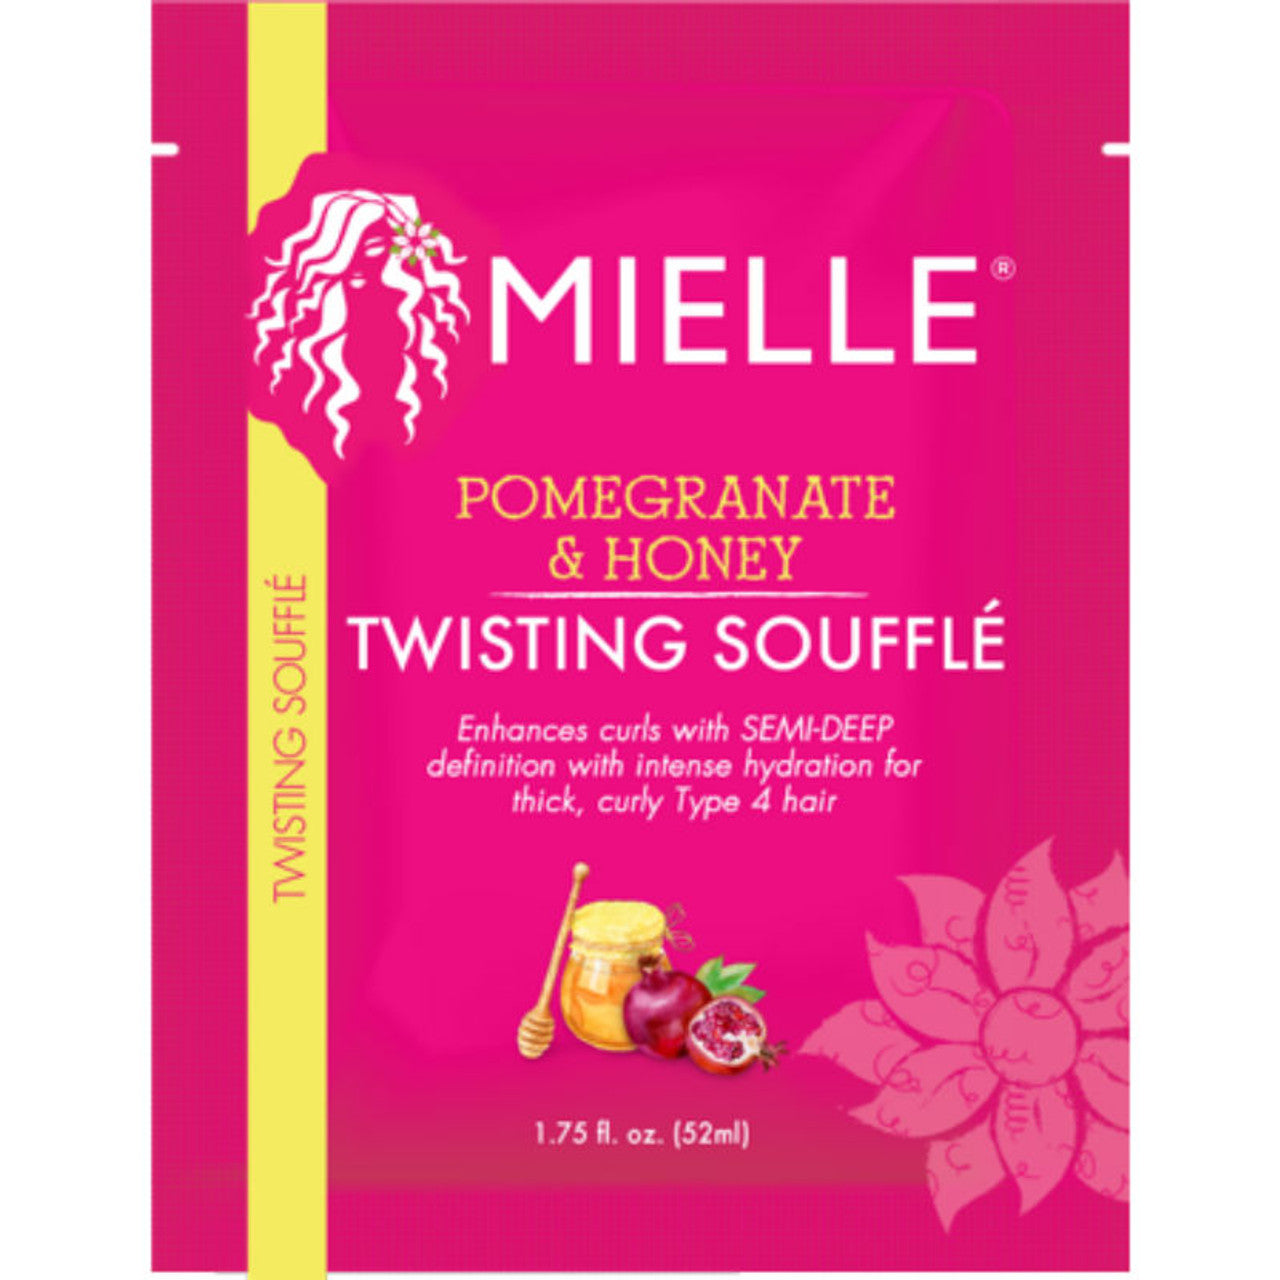 Mielle Pomegranate & Honey Twisting Soufflé Pack